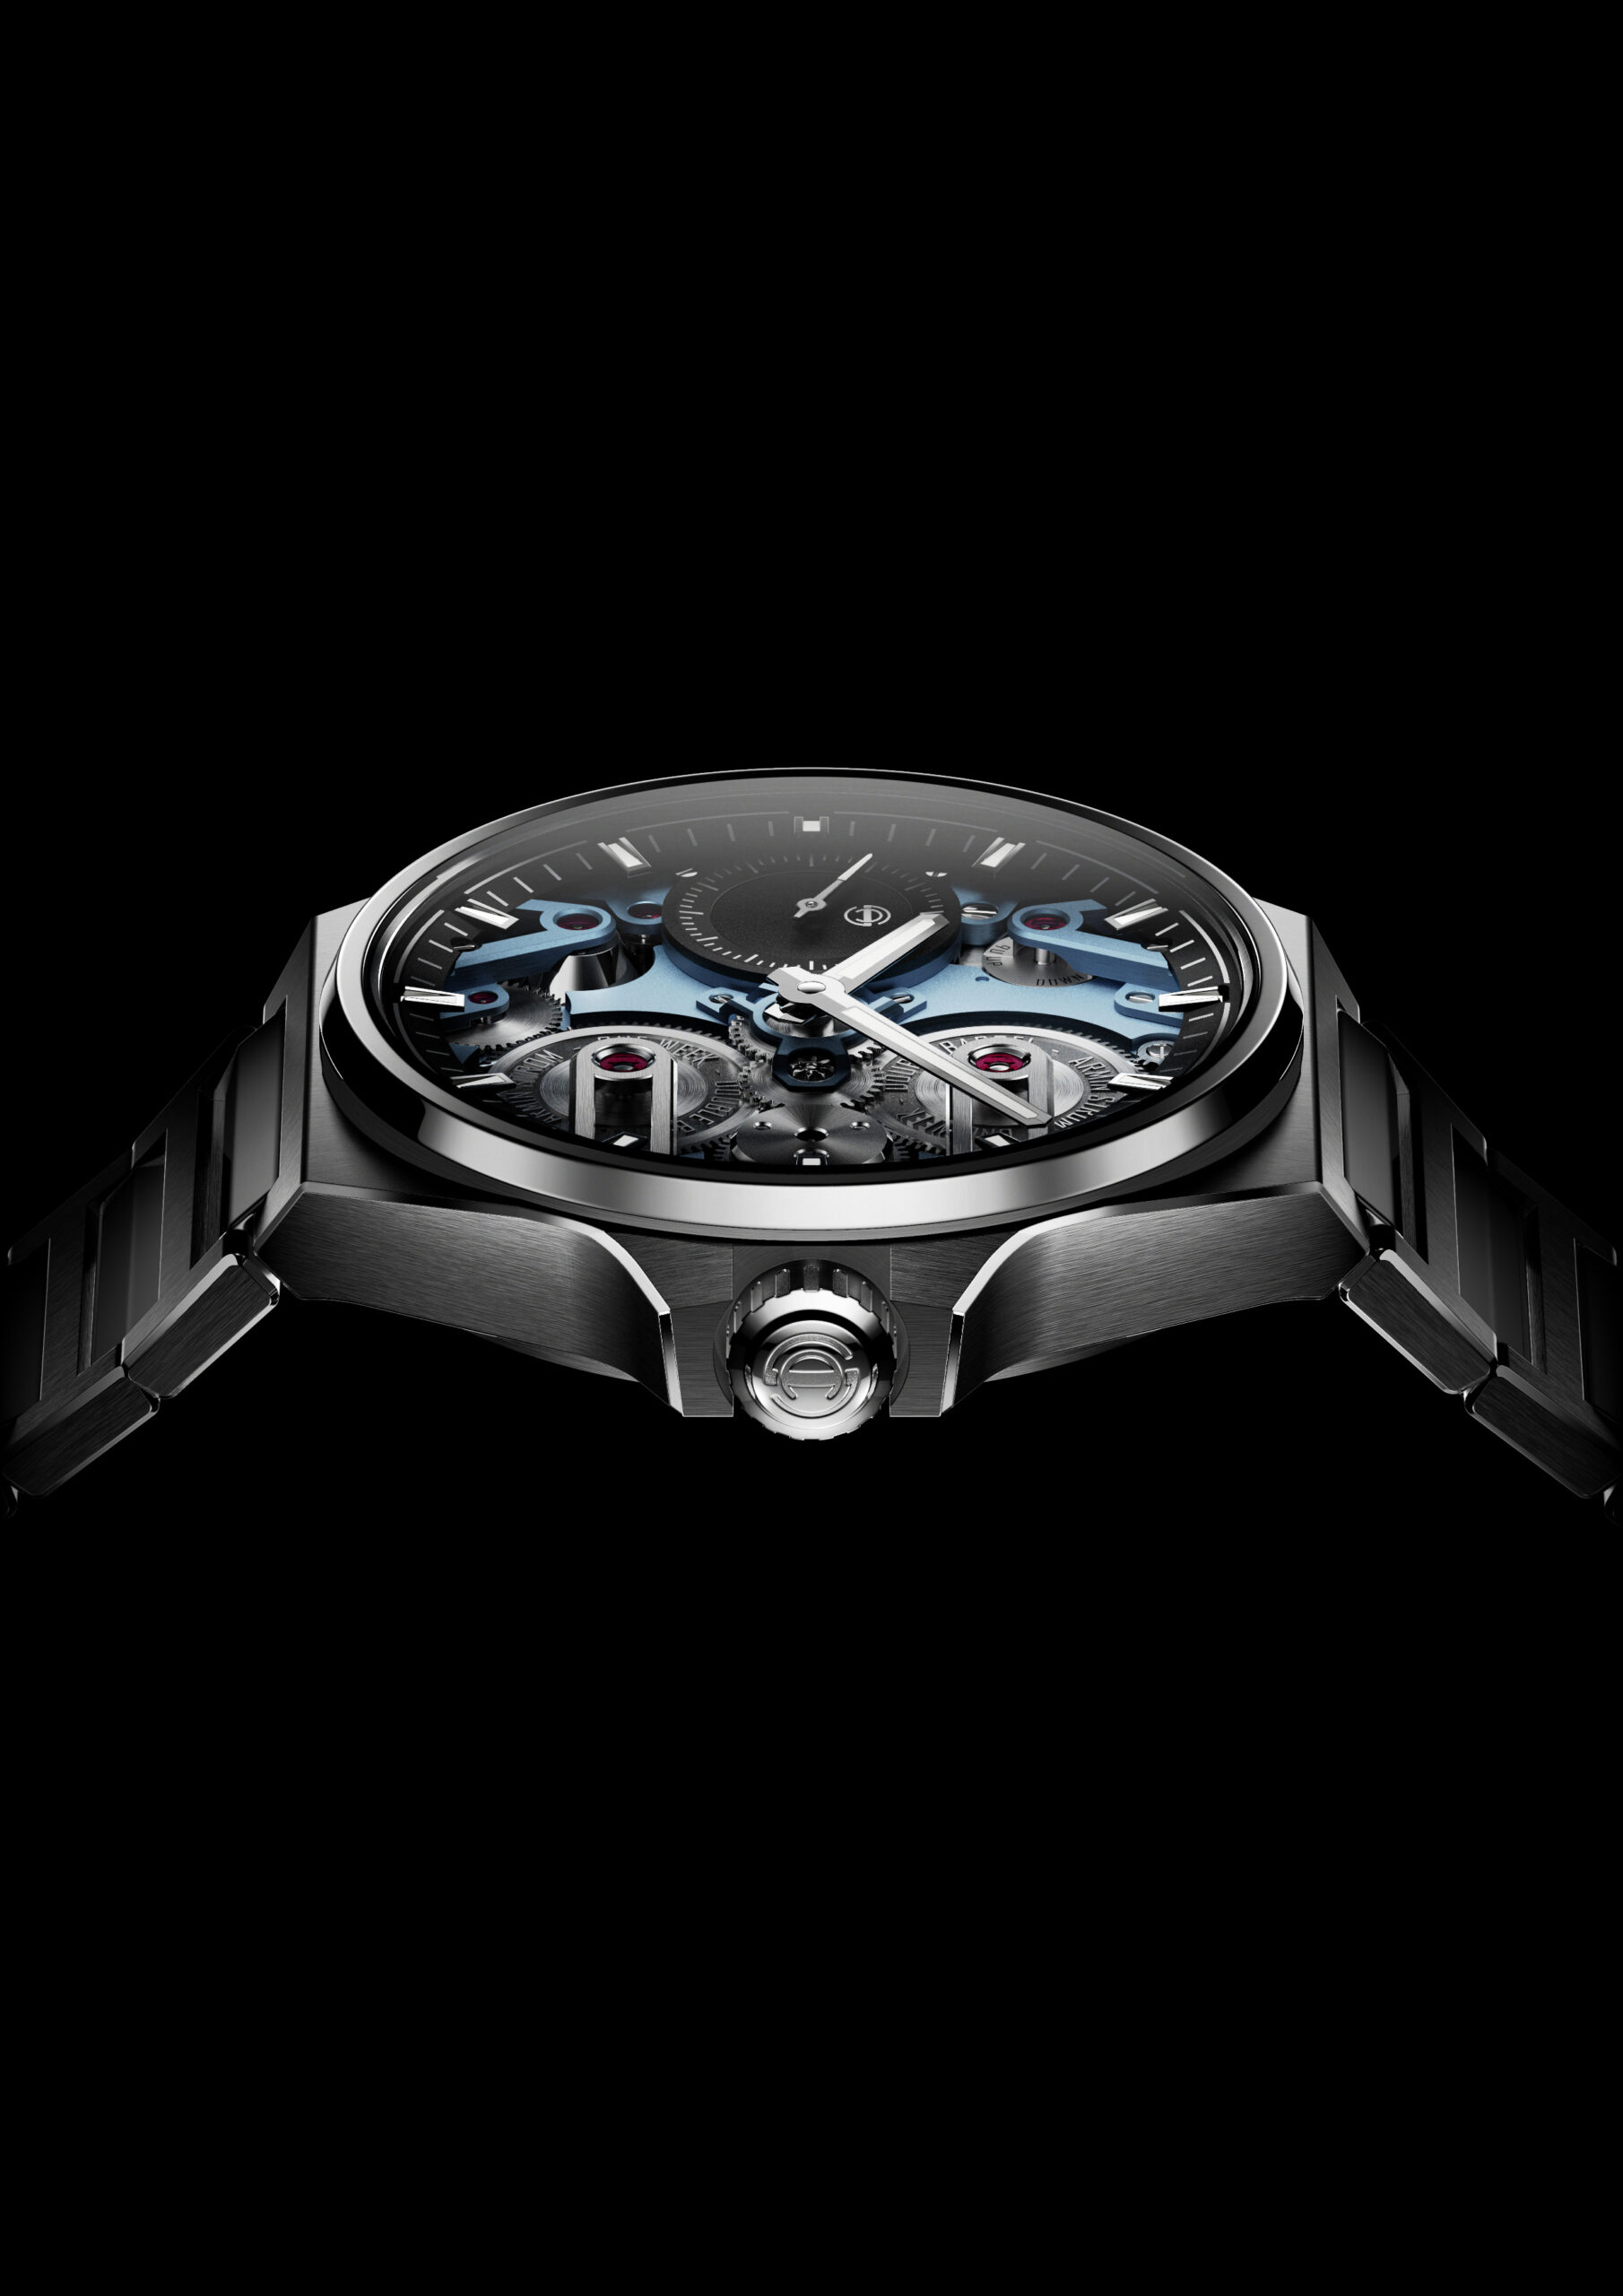 armin strom new watches watch models men novelties trends 2023 limited edition watch brands company switzerland